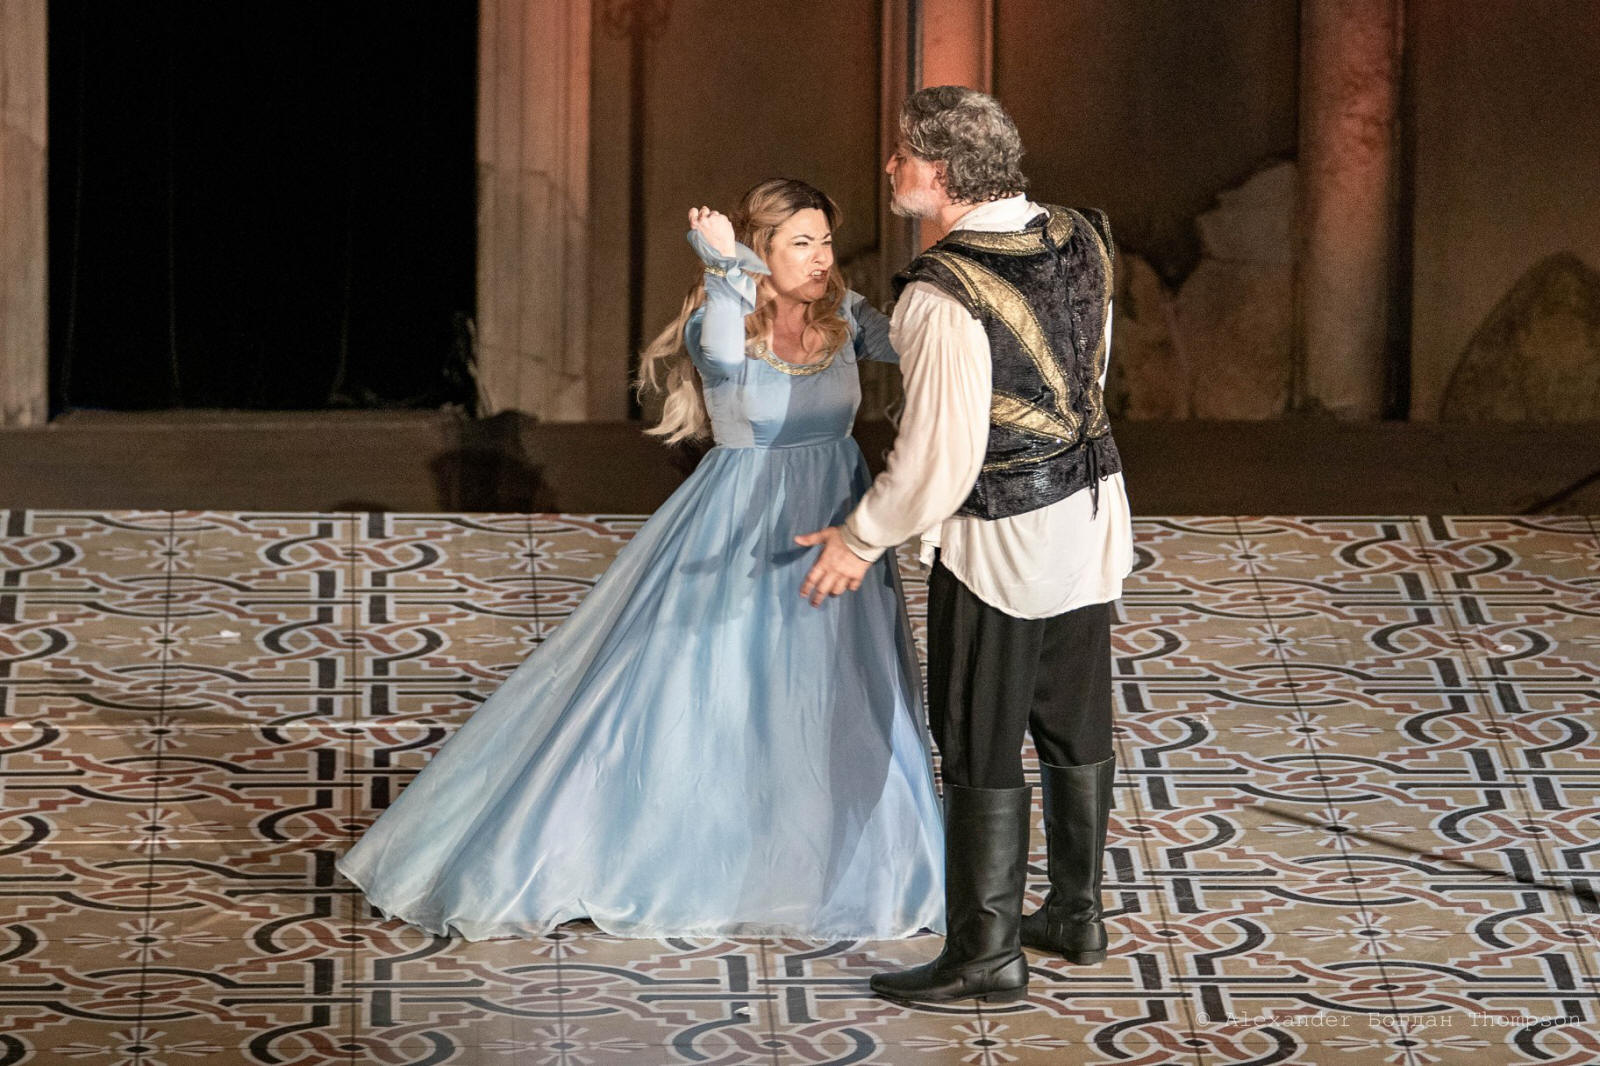 Otello in Plotdiv, July 2019, starring Jos Cura.